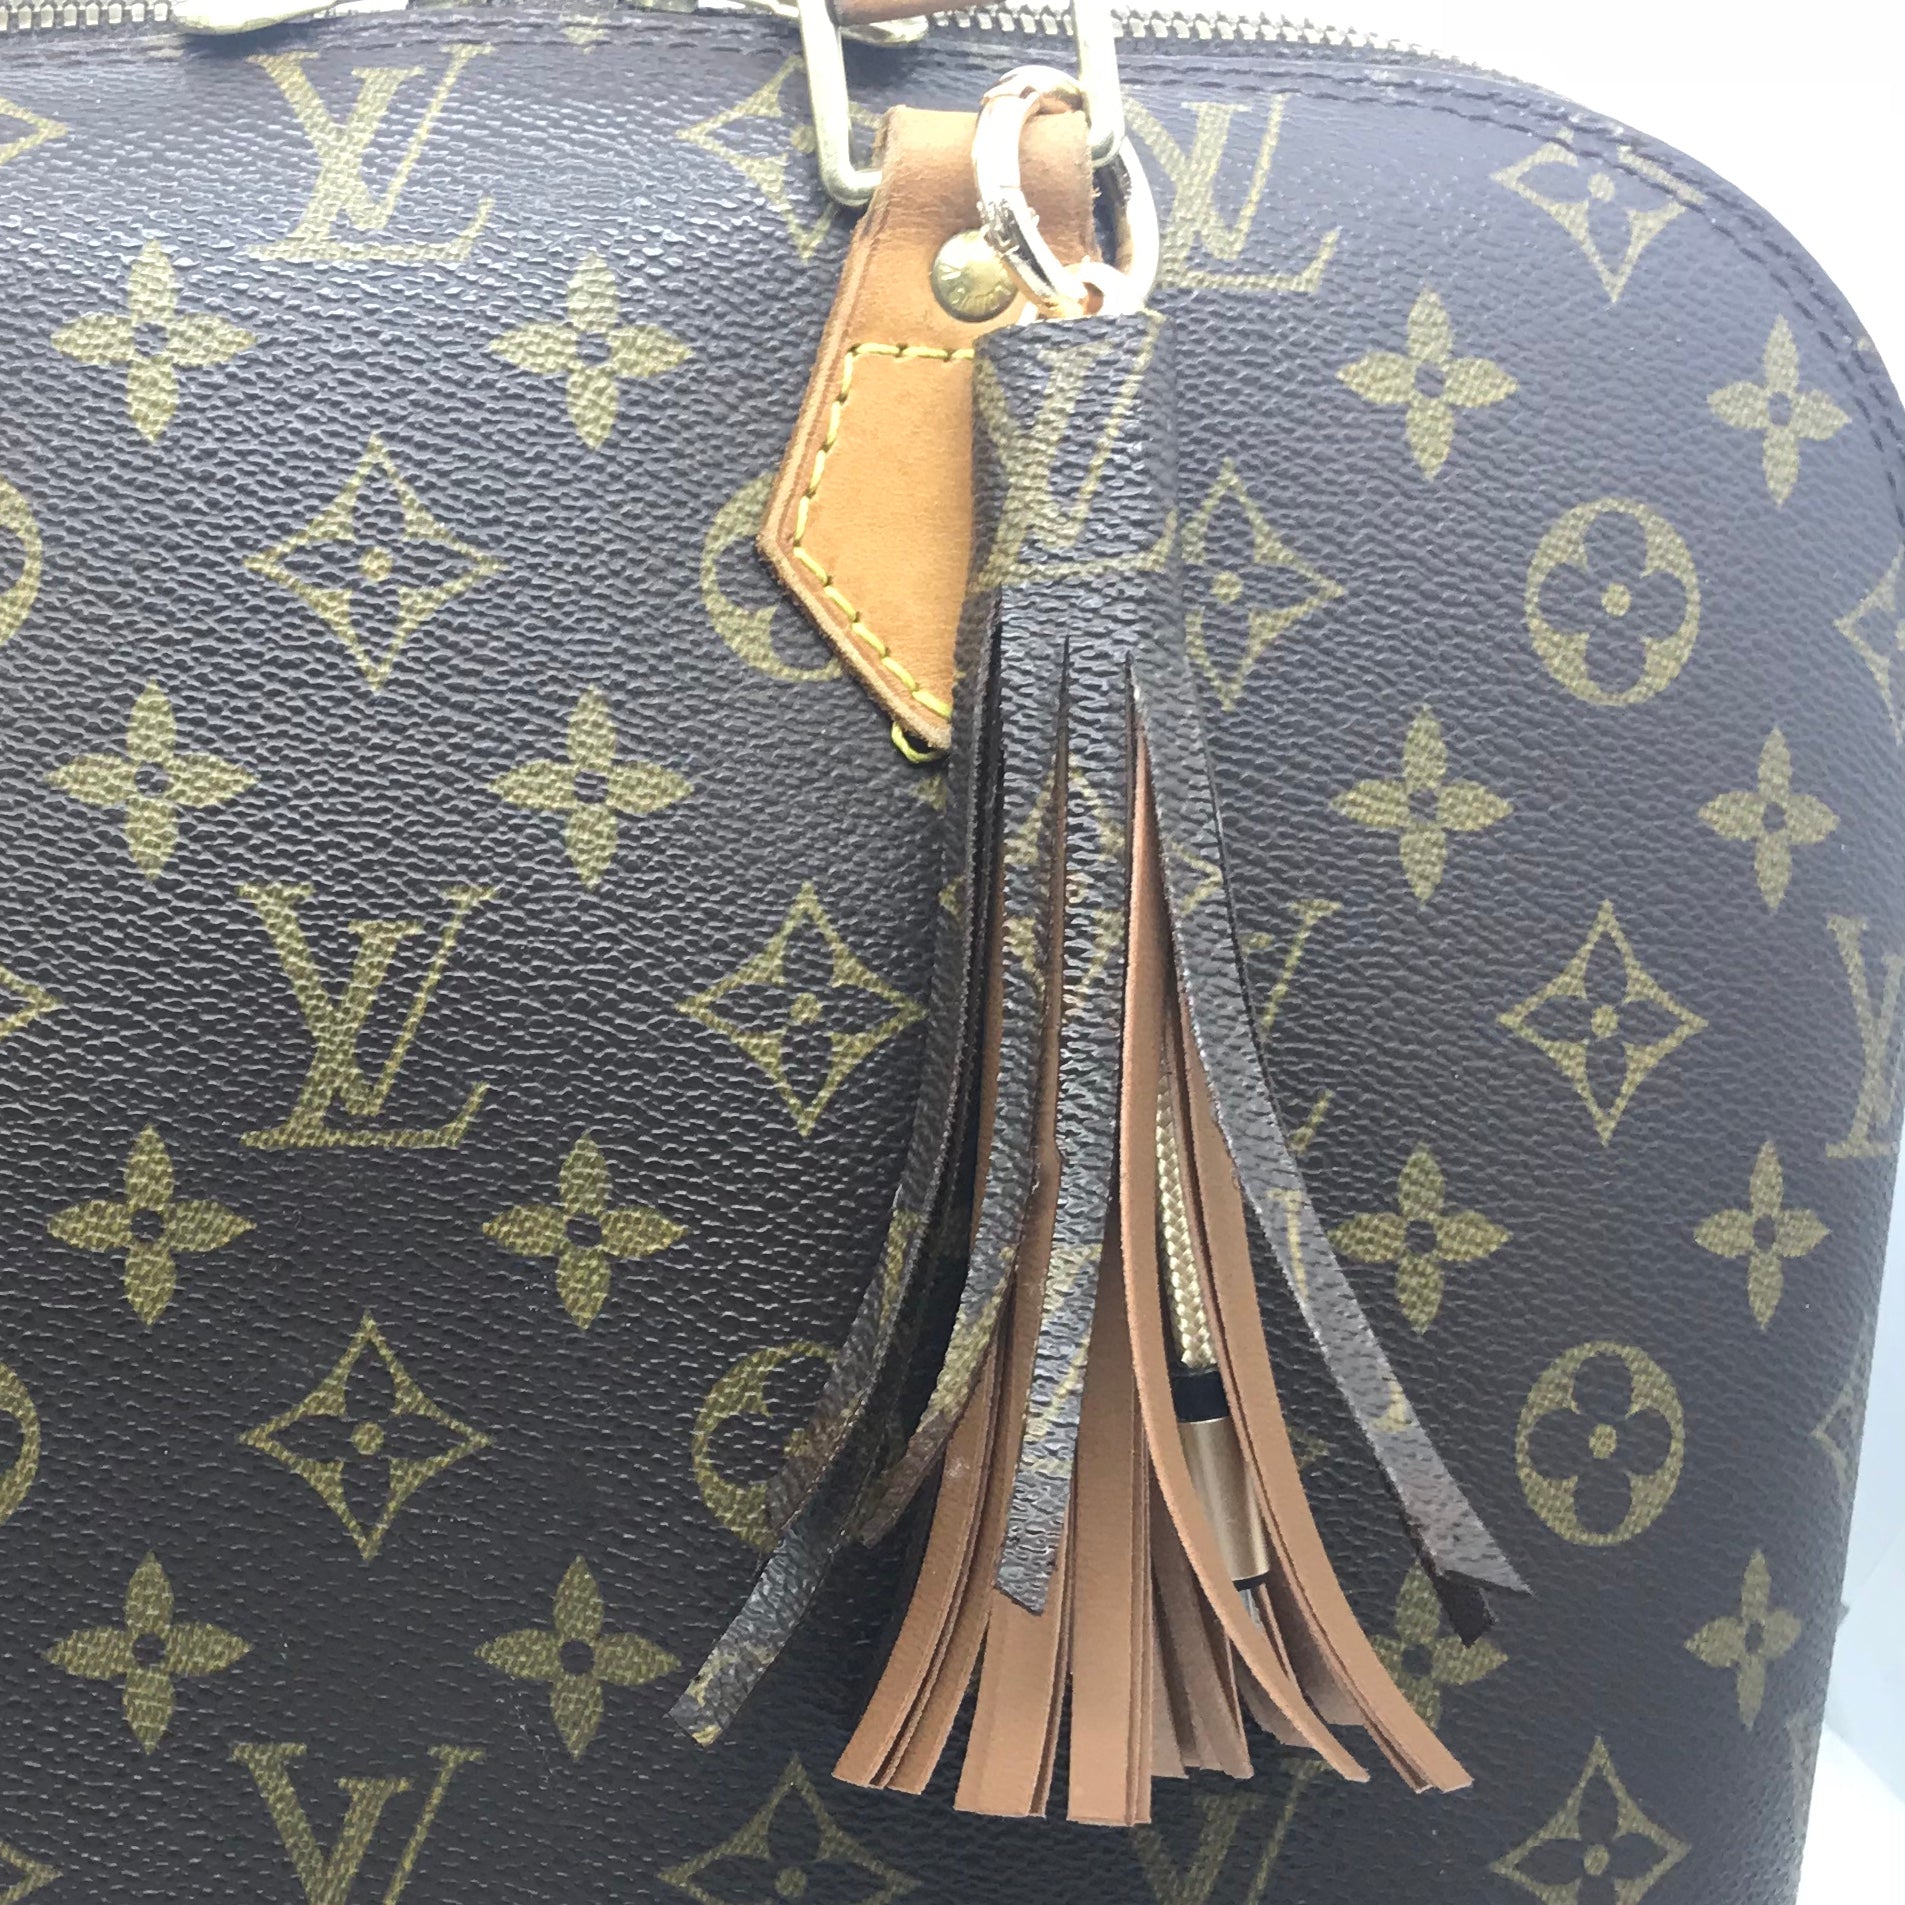 Louis Vuitton leather handles refurbishment lighten and even patina